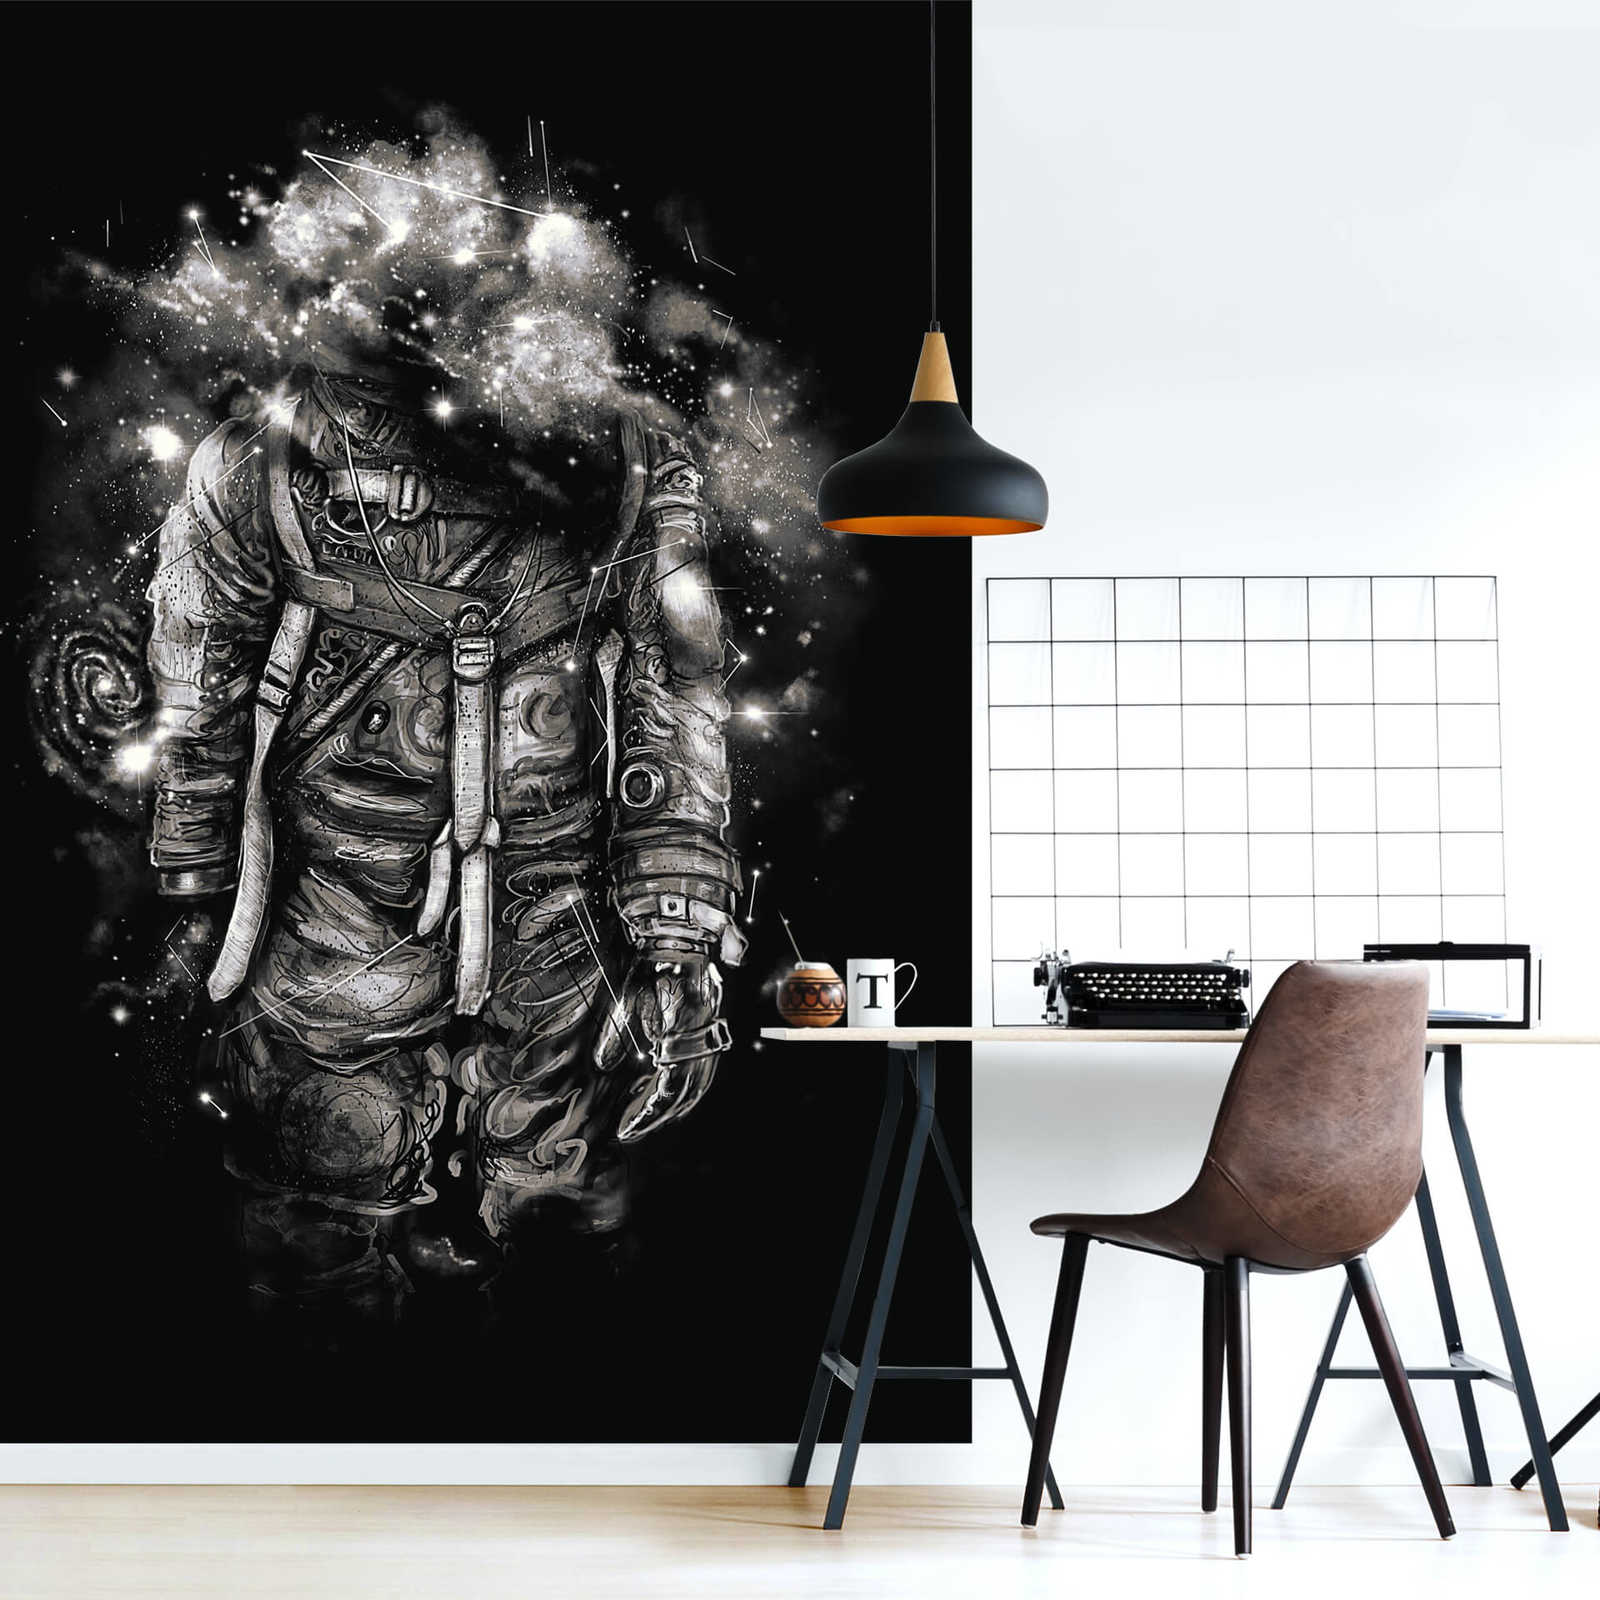             Narrow photo wallpaper black white with pattern
        